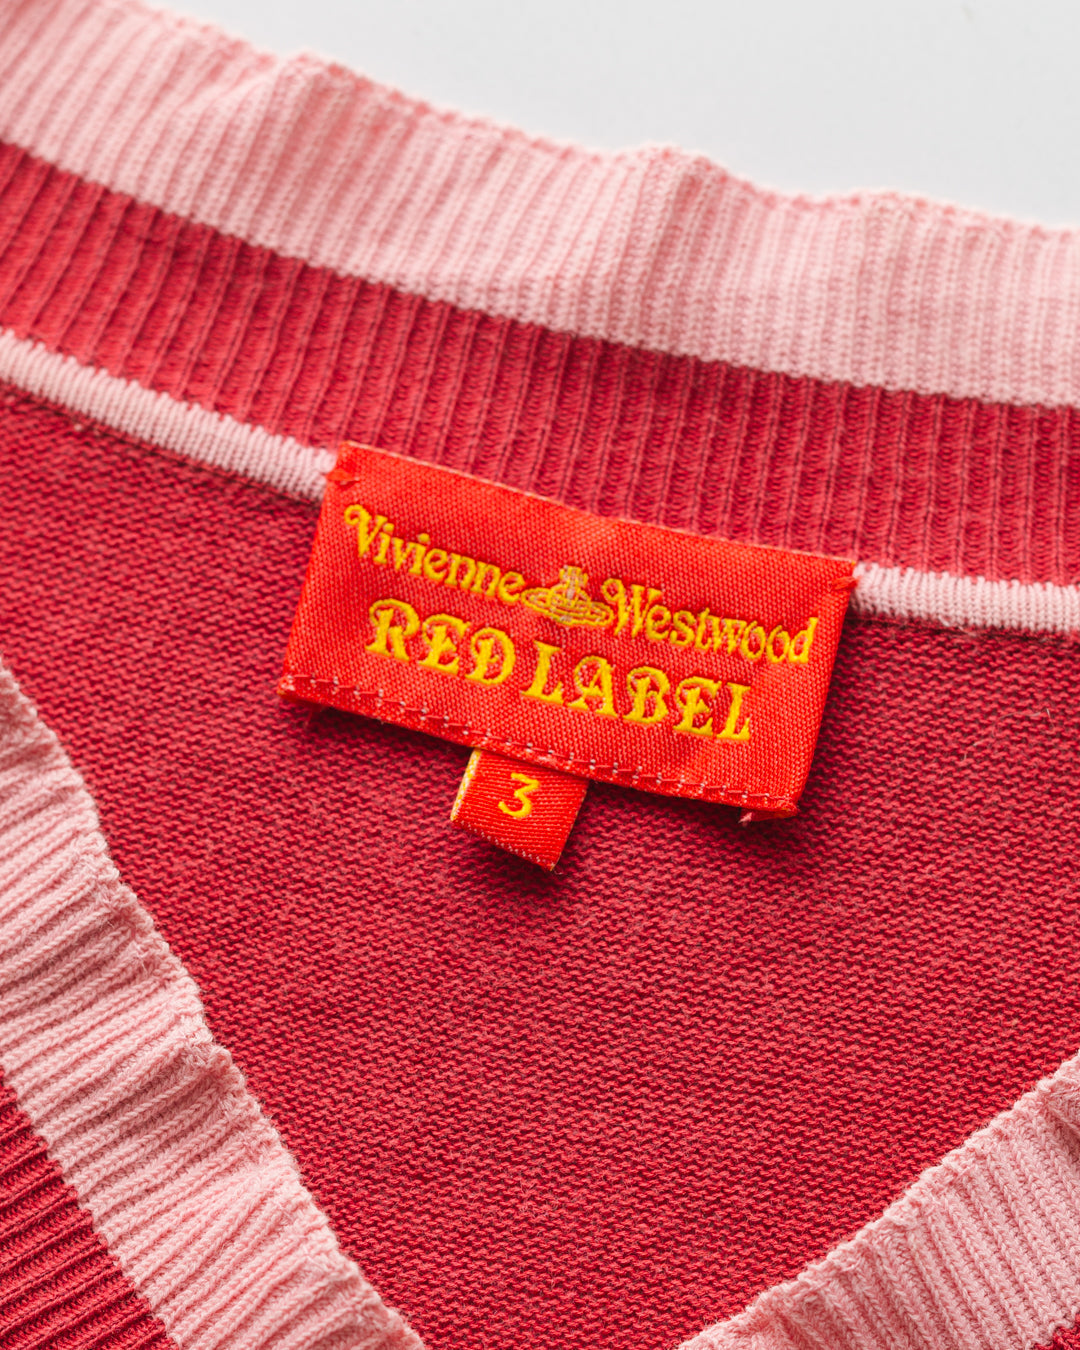 Vivienne Westwood Red Label Knit Top